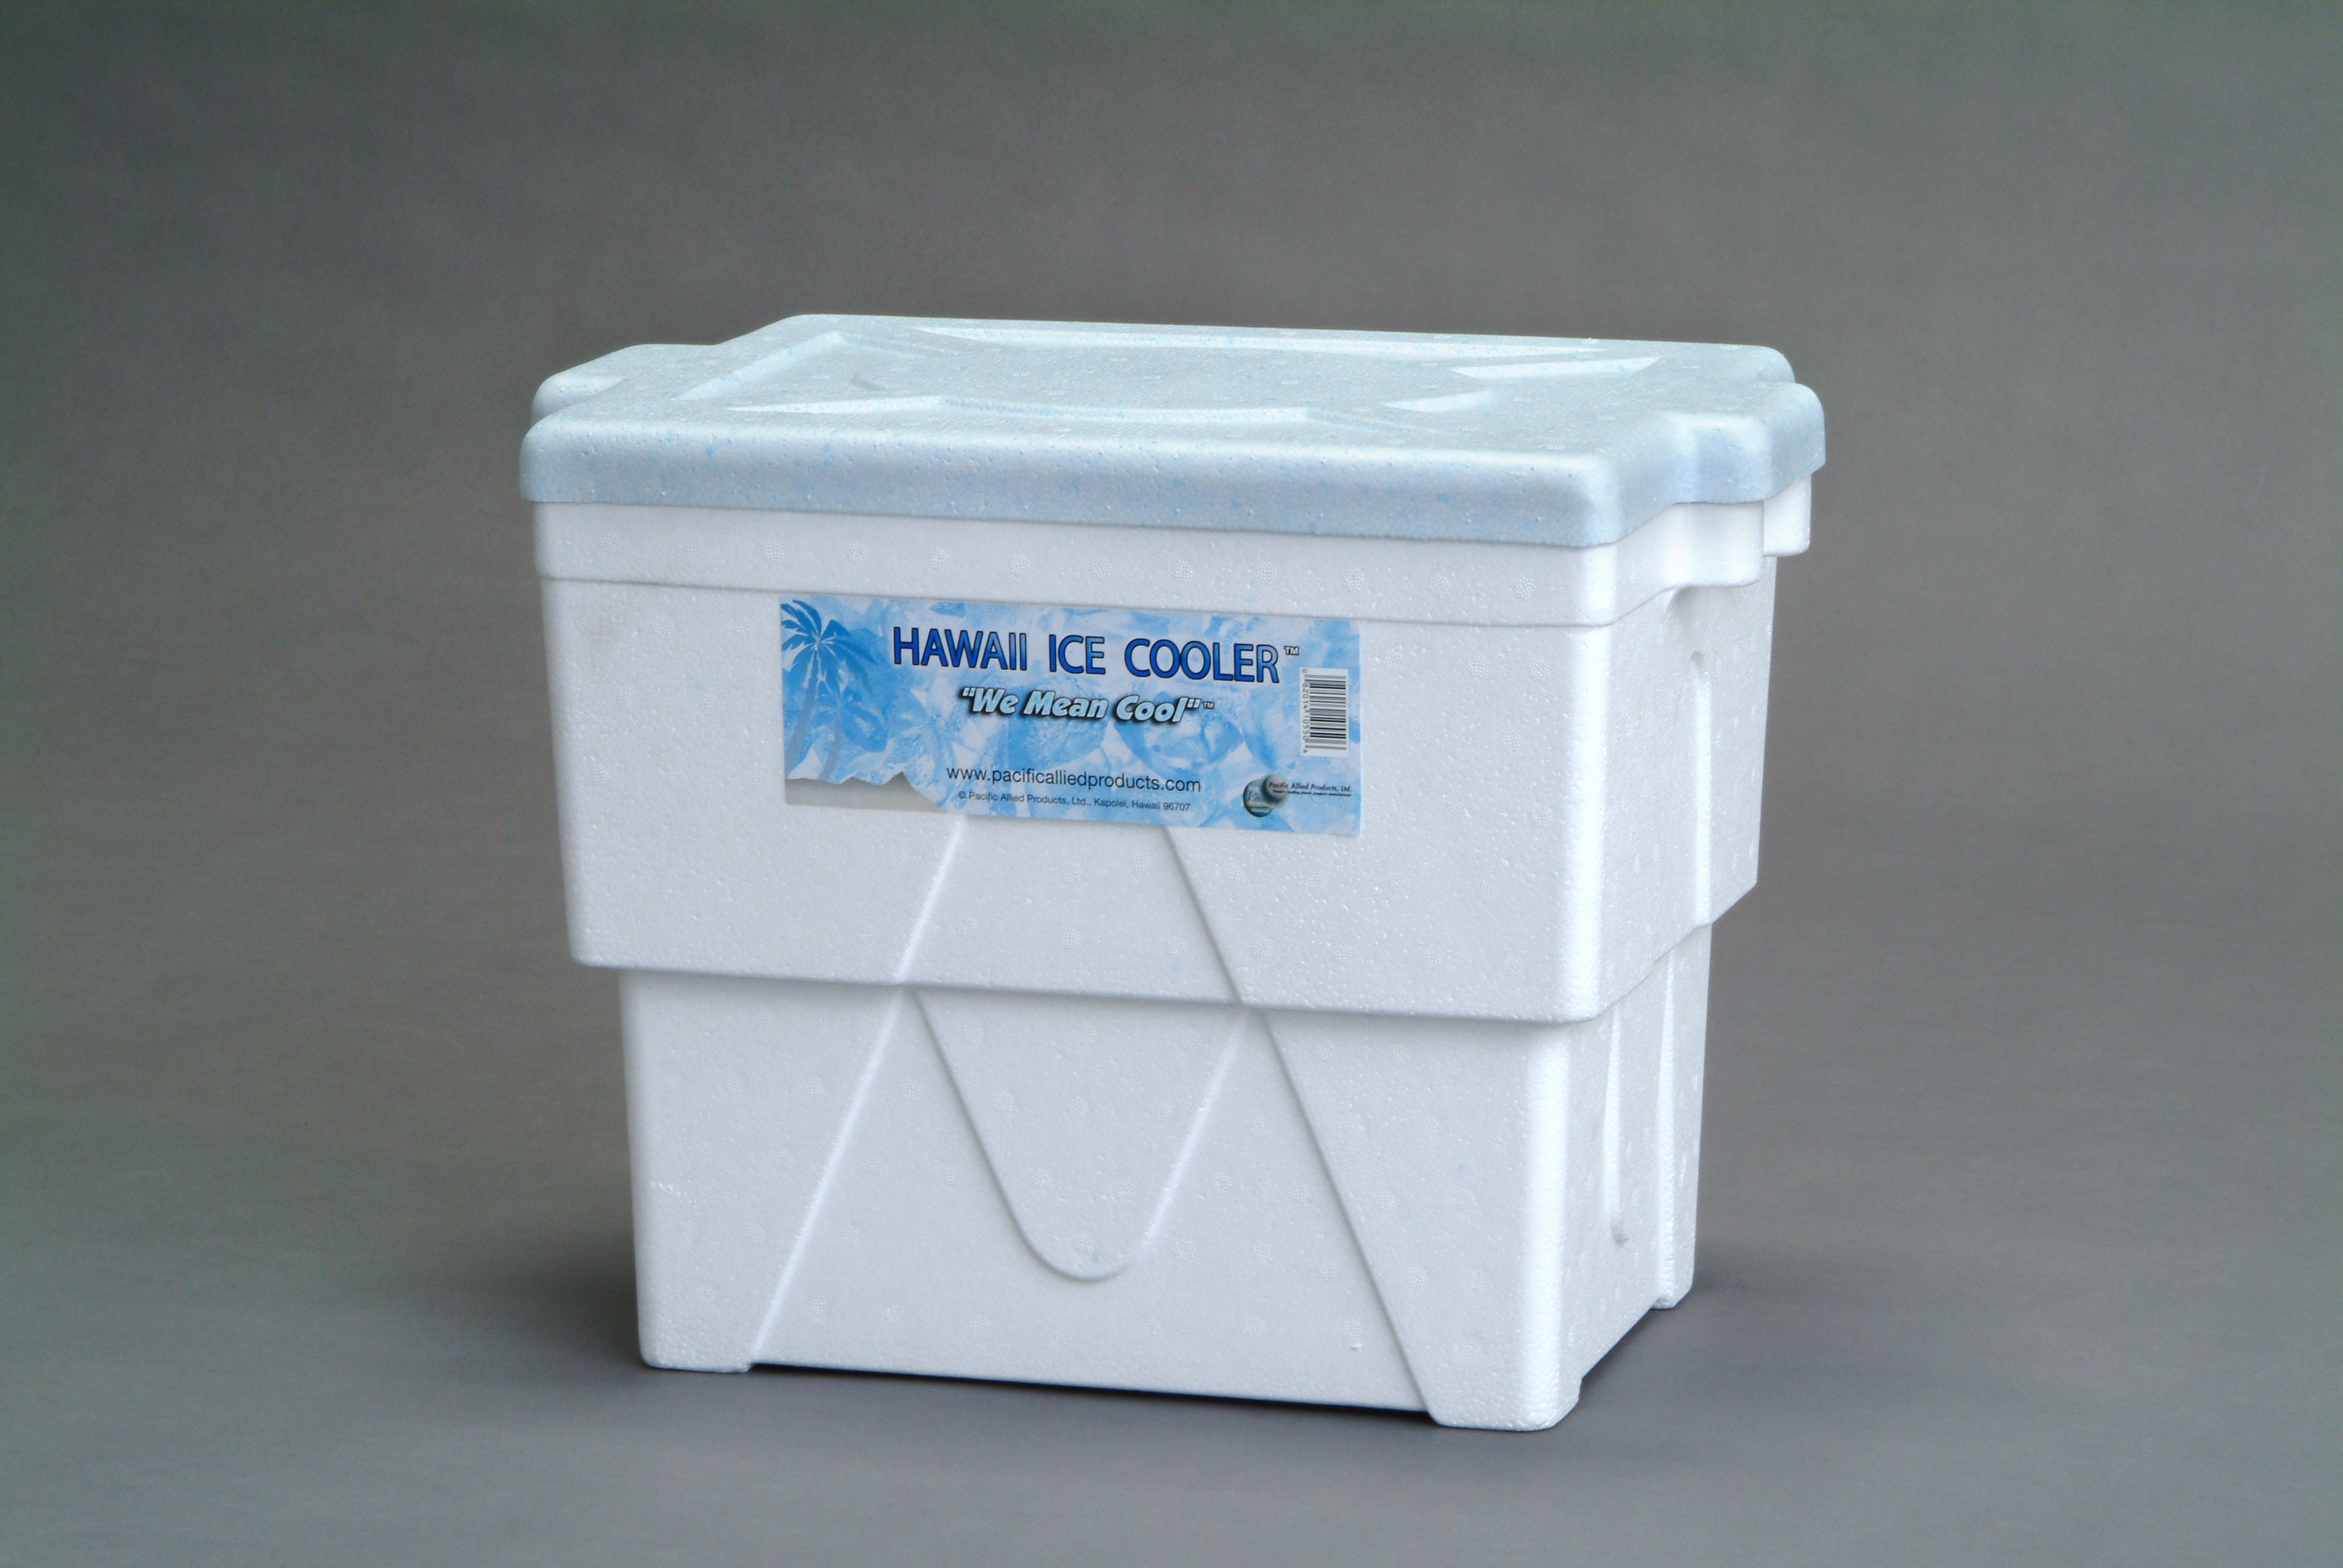 Reusable Styrofoam Cooler Box & Dry Ice — Grocerylanka